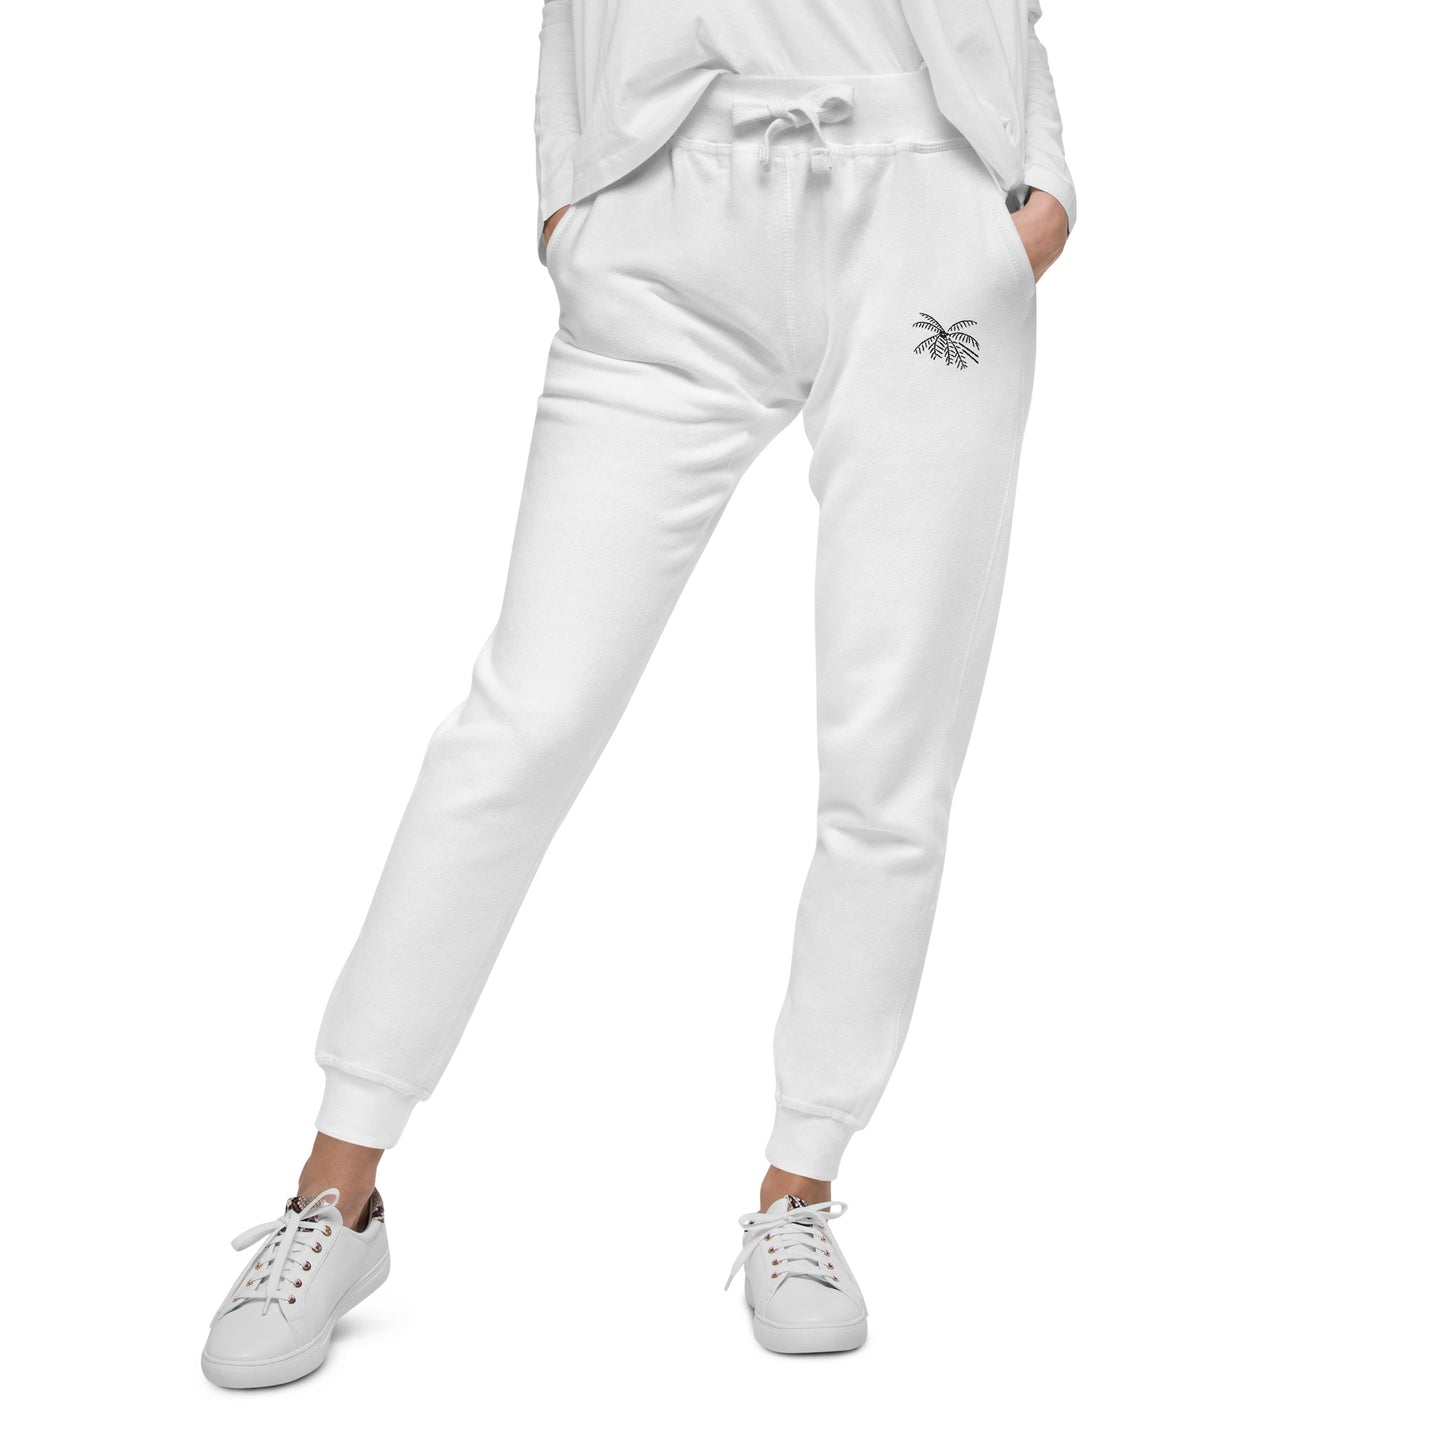 Jadenbree Embroidered Unisex White Fleece Sweatpants